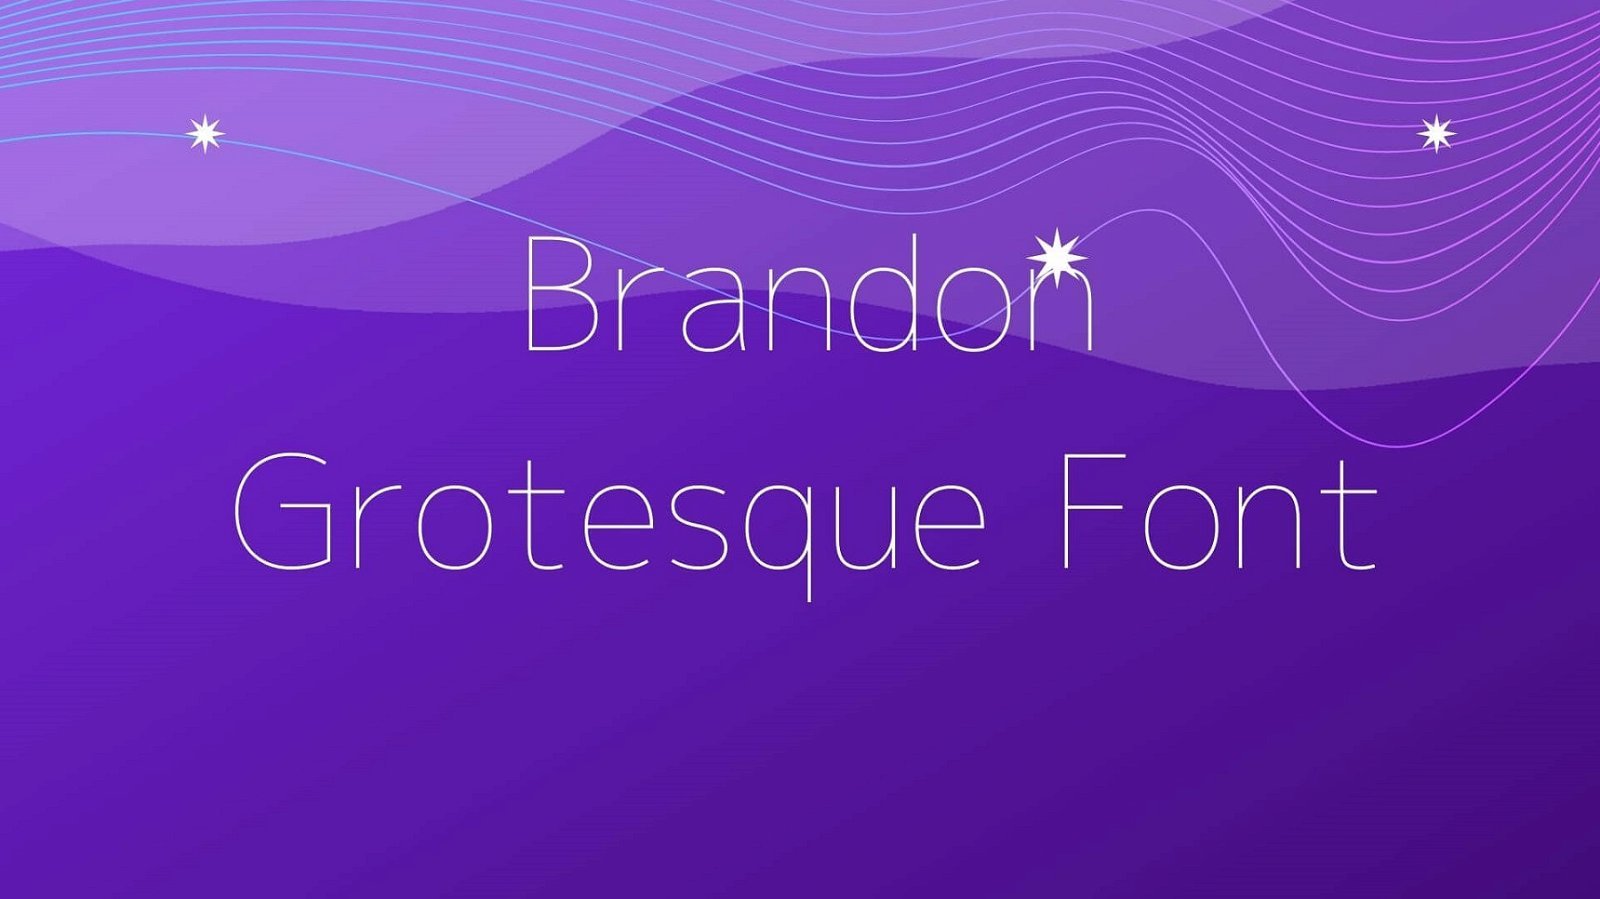 Brandon Grosteque Font